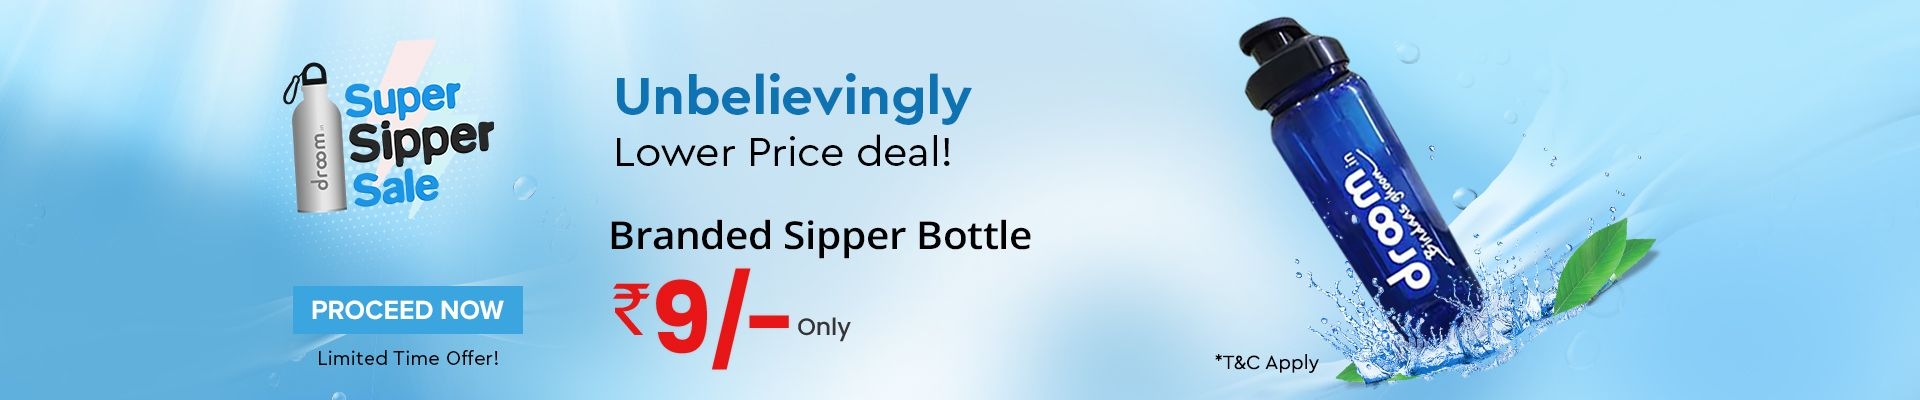 Super Sipper Sale | Register Now Option | Droom